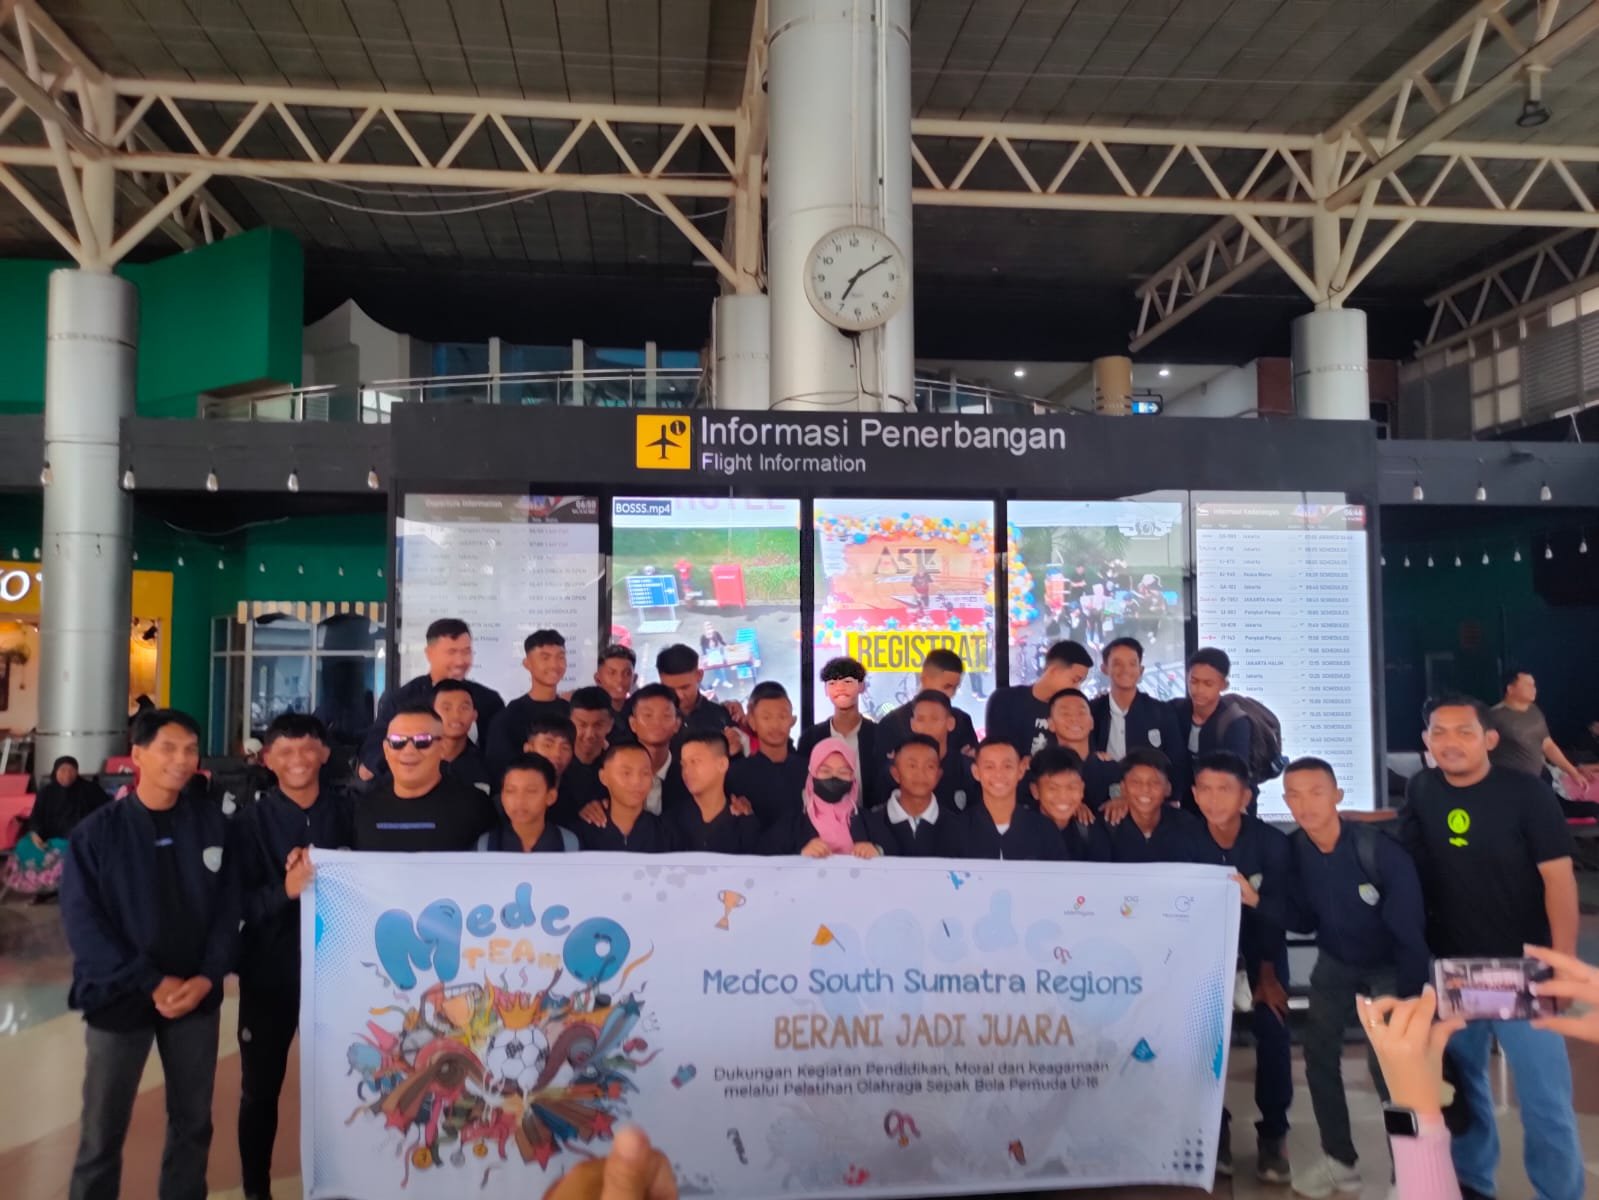 25 pesepak bola muda dan lima pelatih asal Sumatera Selatan ke Sleman, Yogyakarta untuk mengikuti pelatihan intensif sekaligus berpartisipasi di kompetisi Super Elja League MedcoEnergi X PSS Sleman, di Yogyakarta